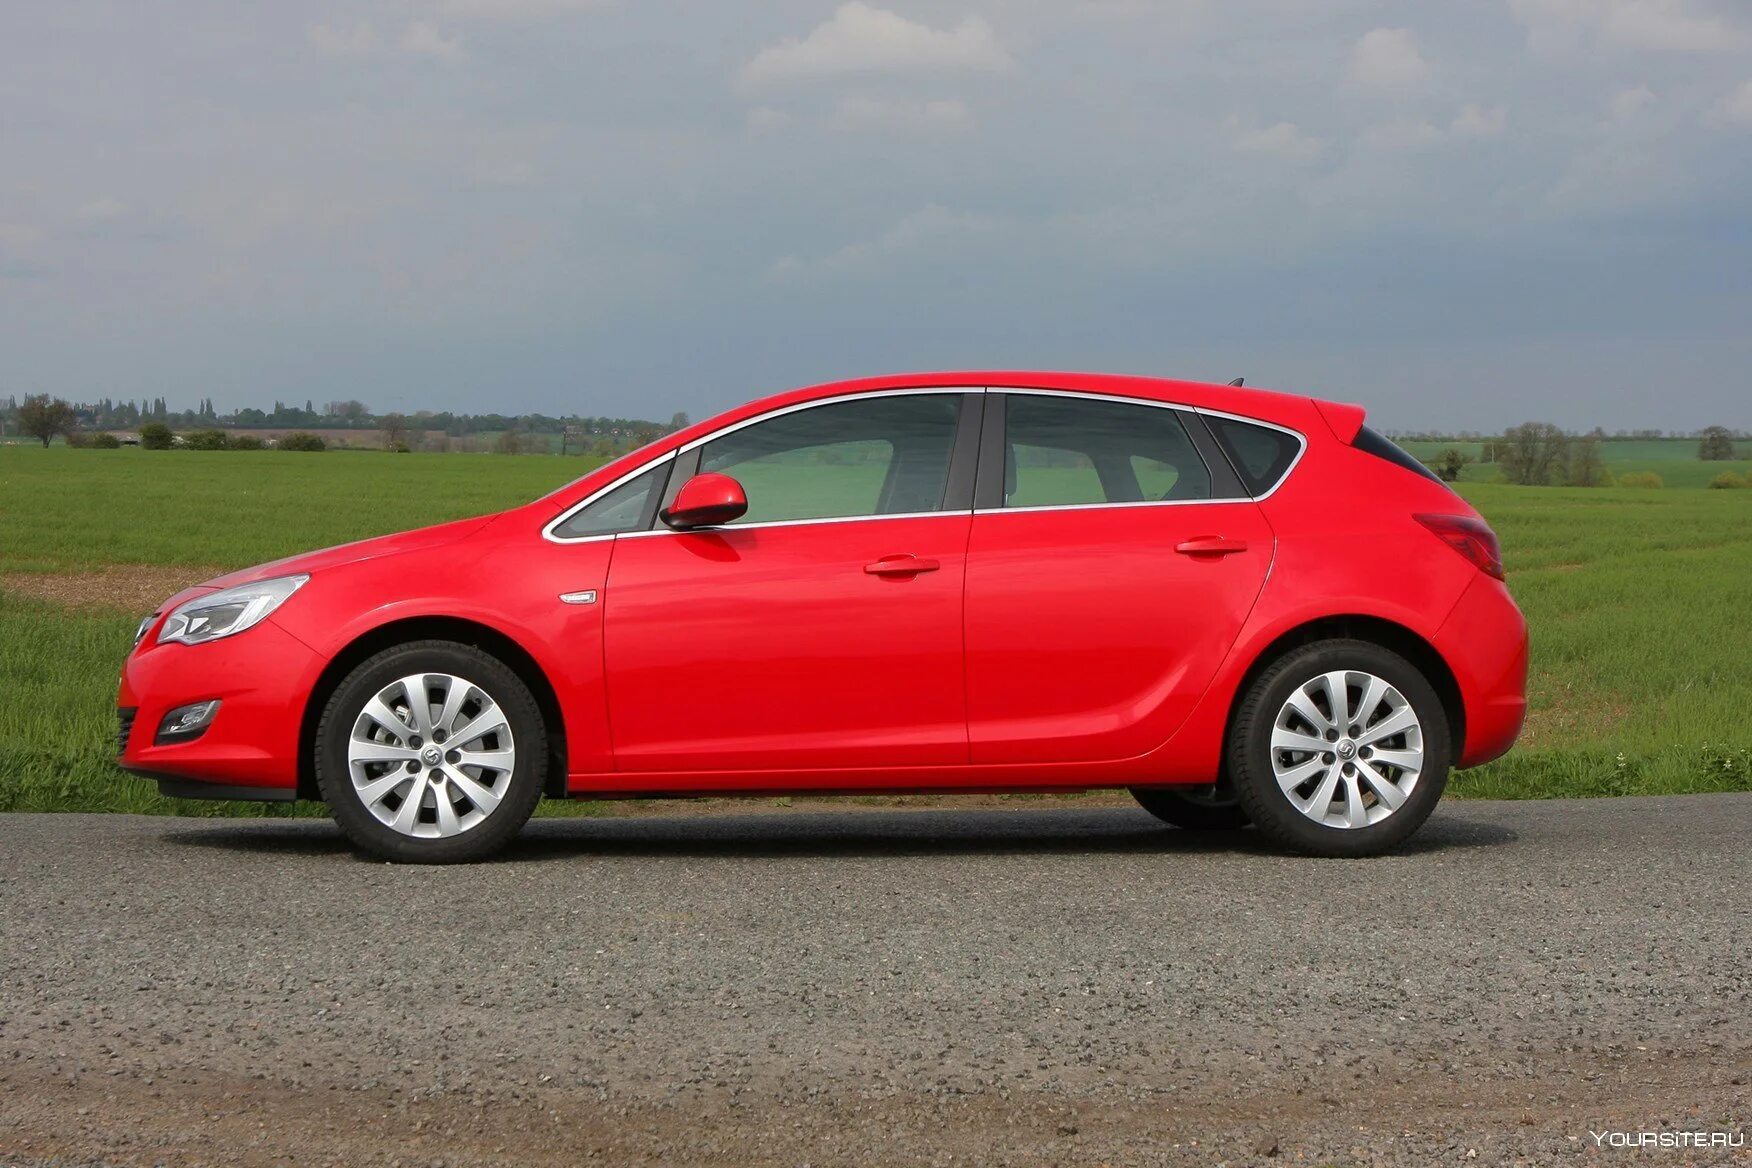 Opel Astra 2015 хэтчбек. Opel Astra j 2015 хэтчбек. Как работает хэтчбек